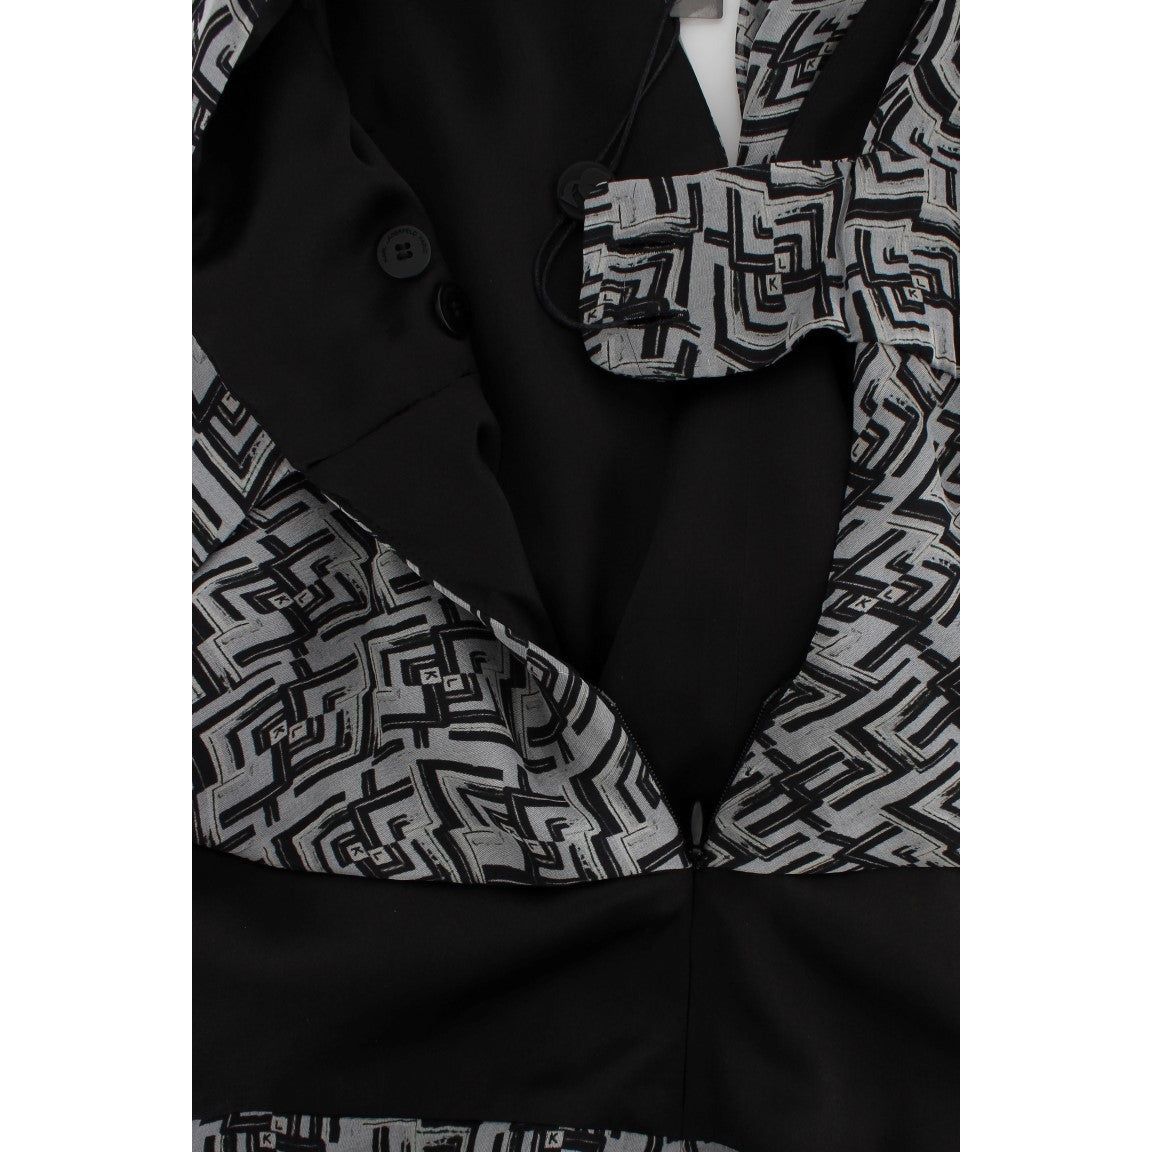 Karl Lagerfeld Elegant Silk Blouse with Logo Detailing gray-black-silk-blouse-top 309427-black-gray-silk-blouse-top-8.jpg